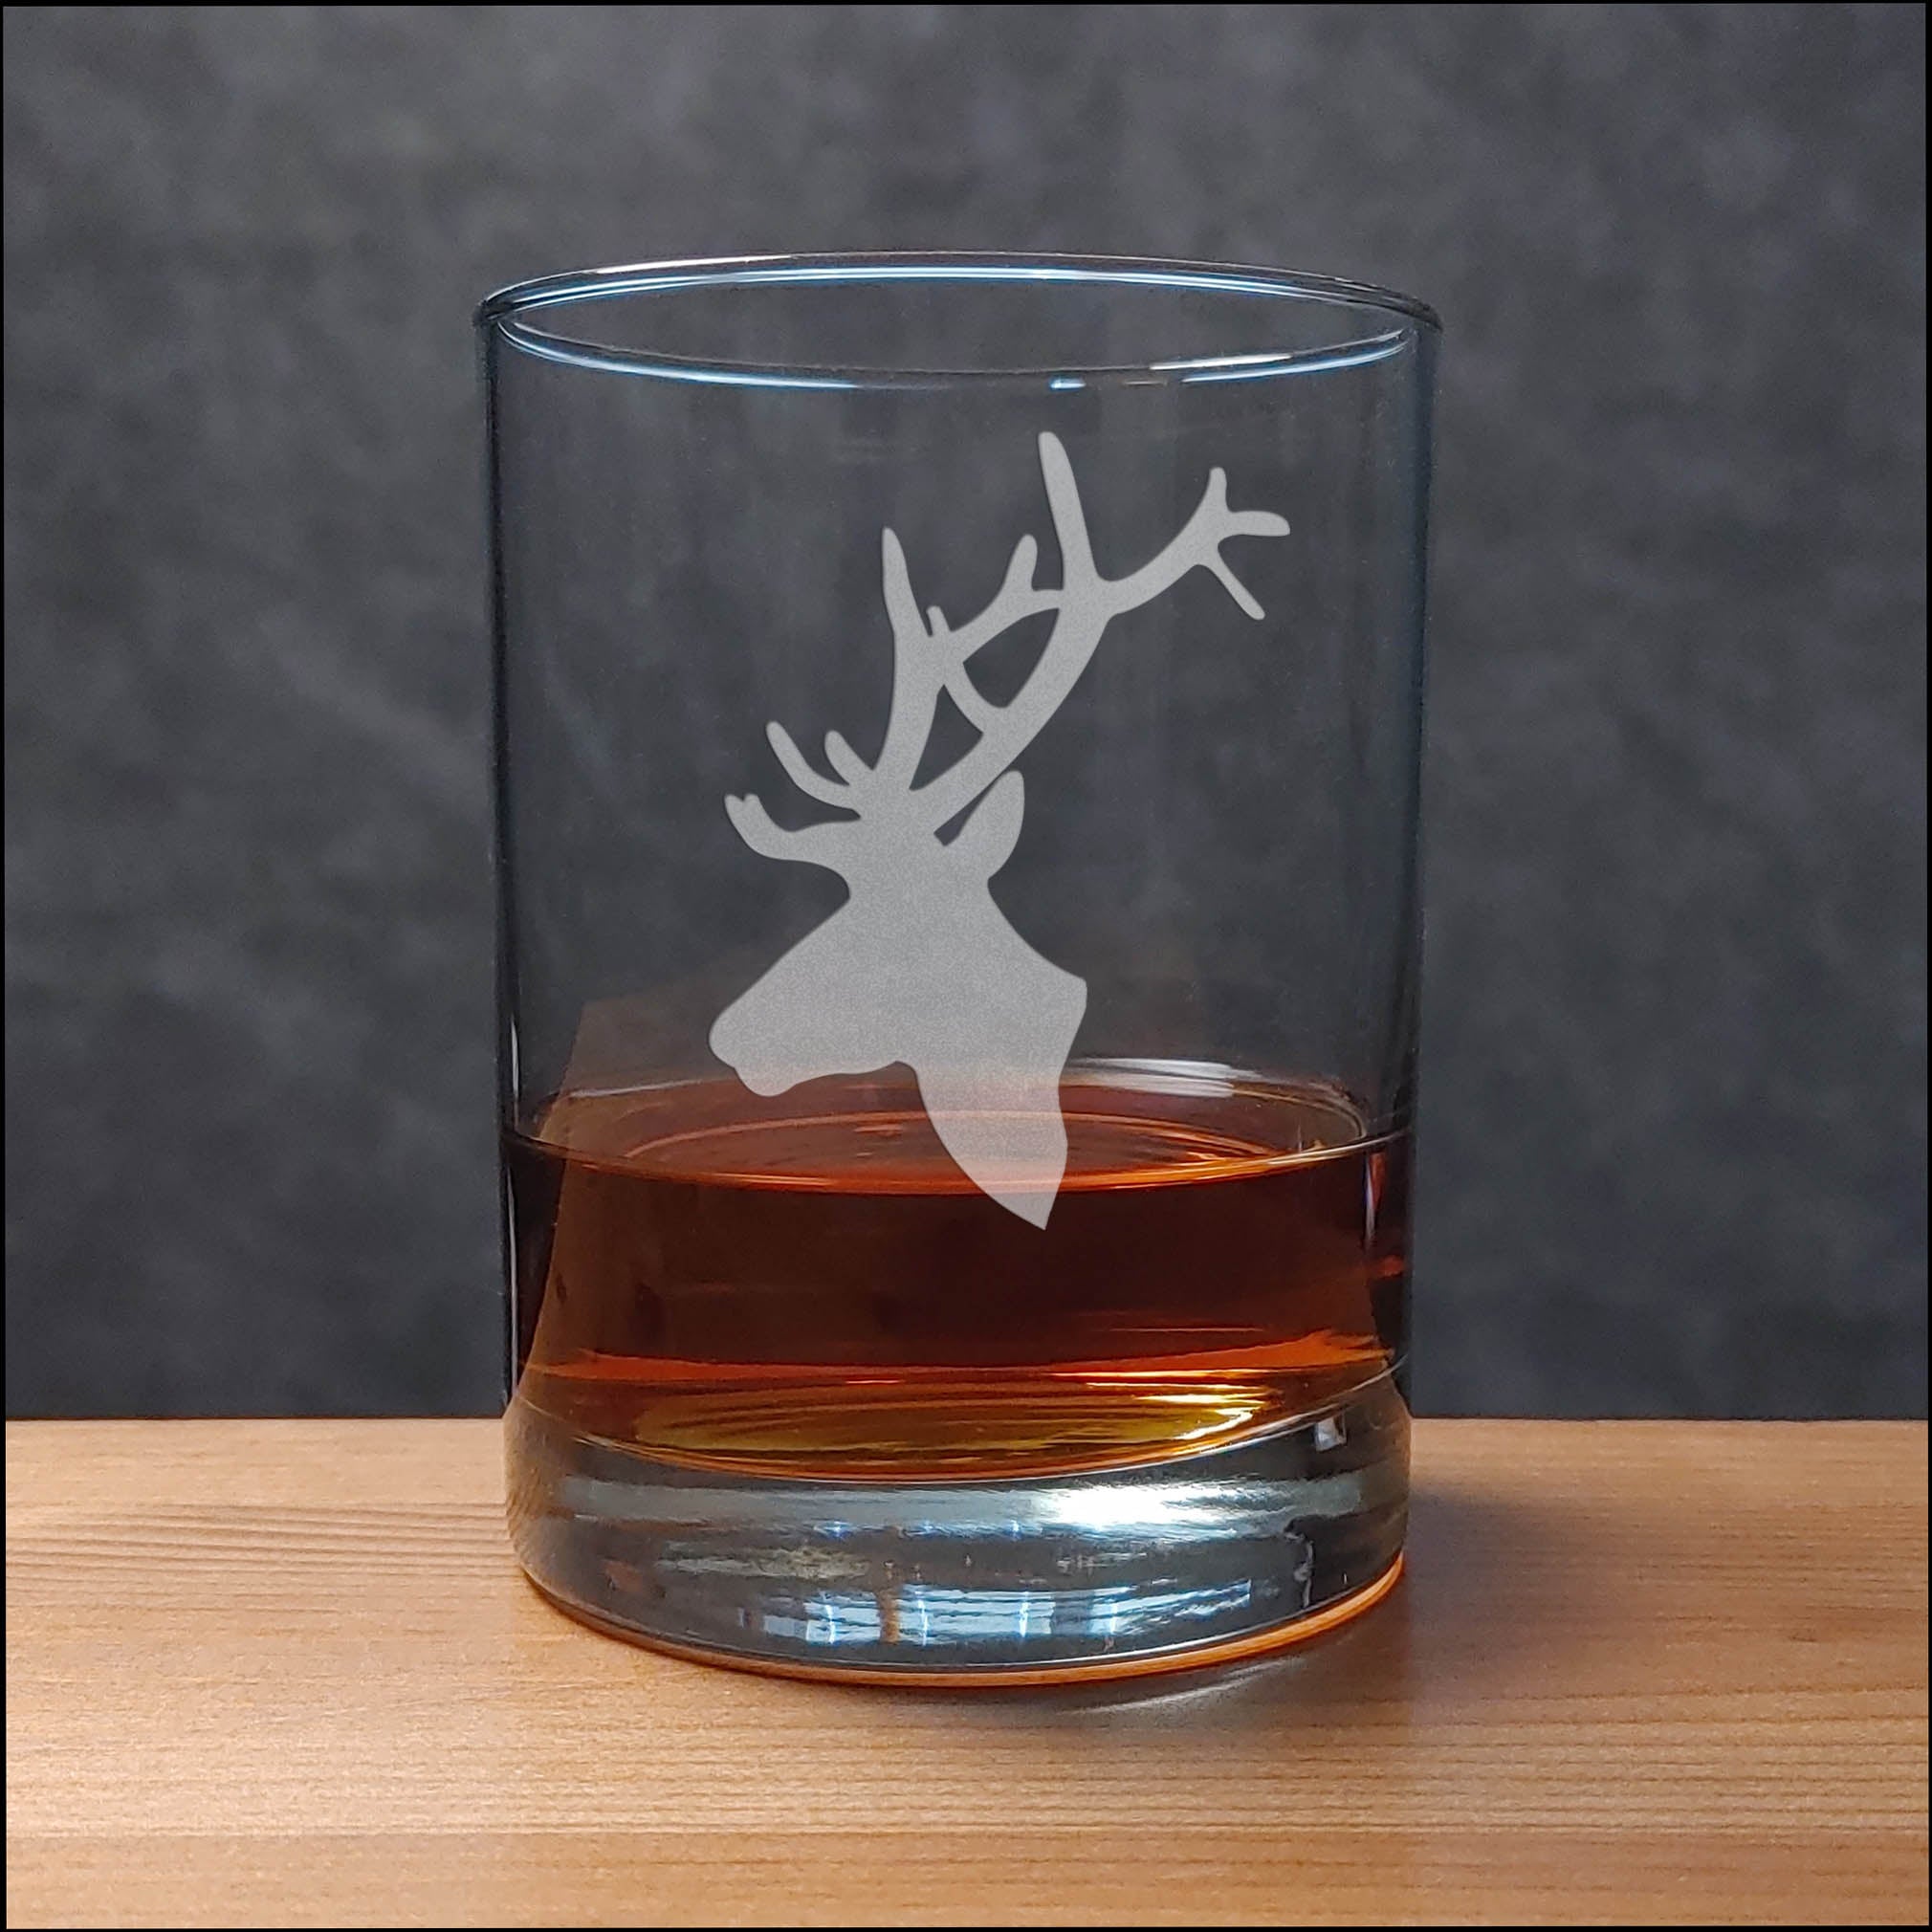 Elk Head 13 oz WhiskeyGlass - Design 2 - Copyright Hues in Glass